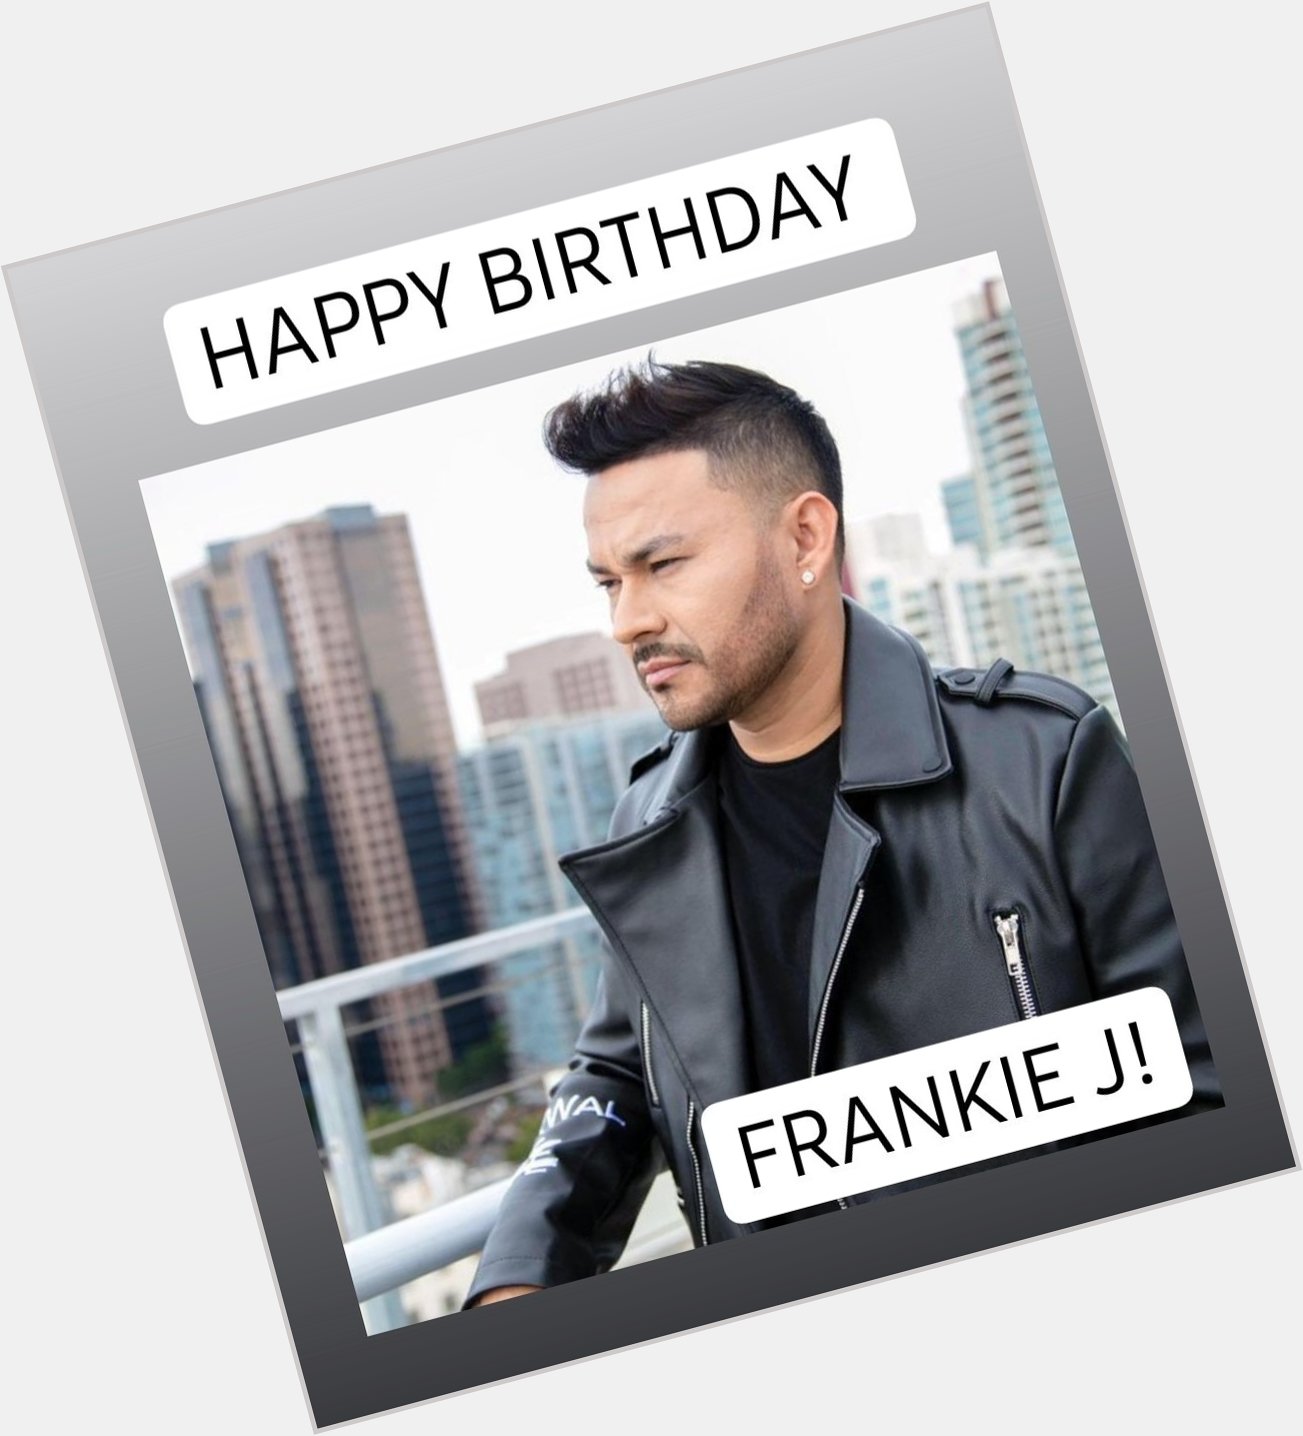 Happy Birthday, Frankie J!
from Tejano 360 Network 